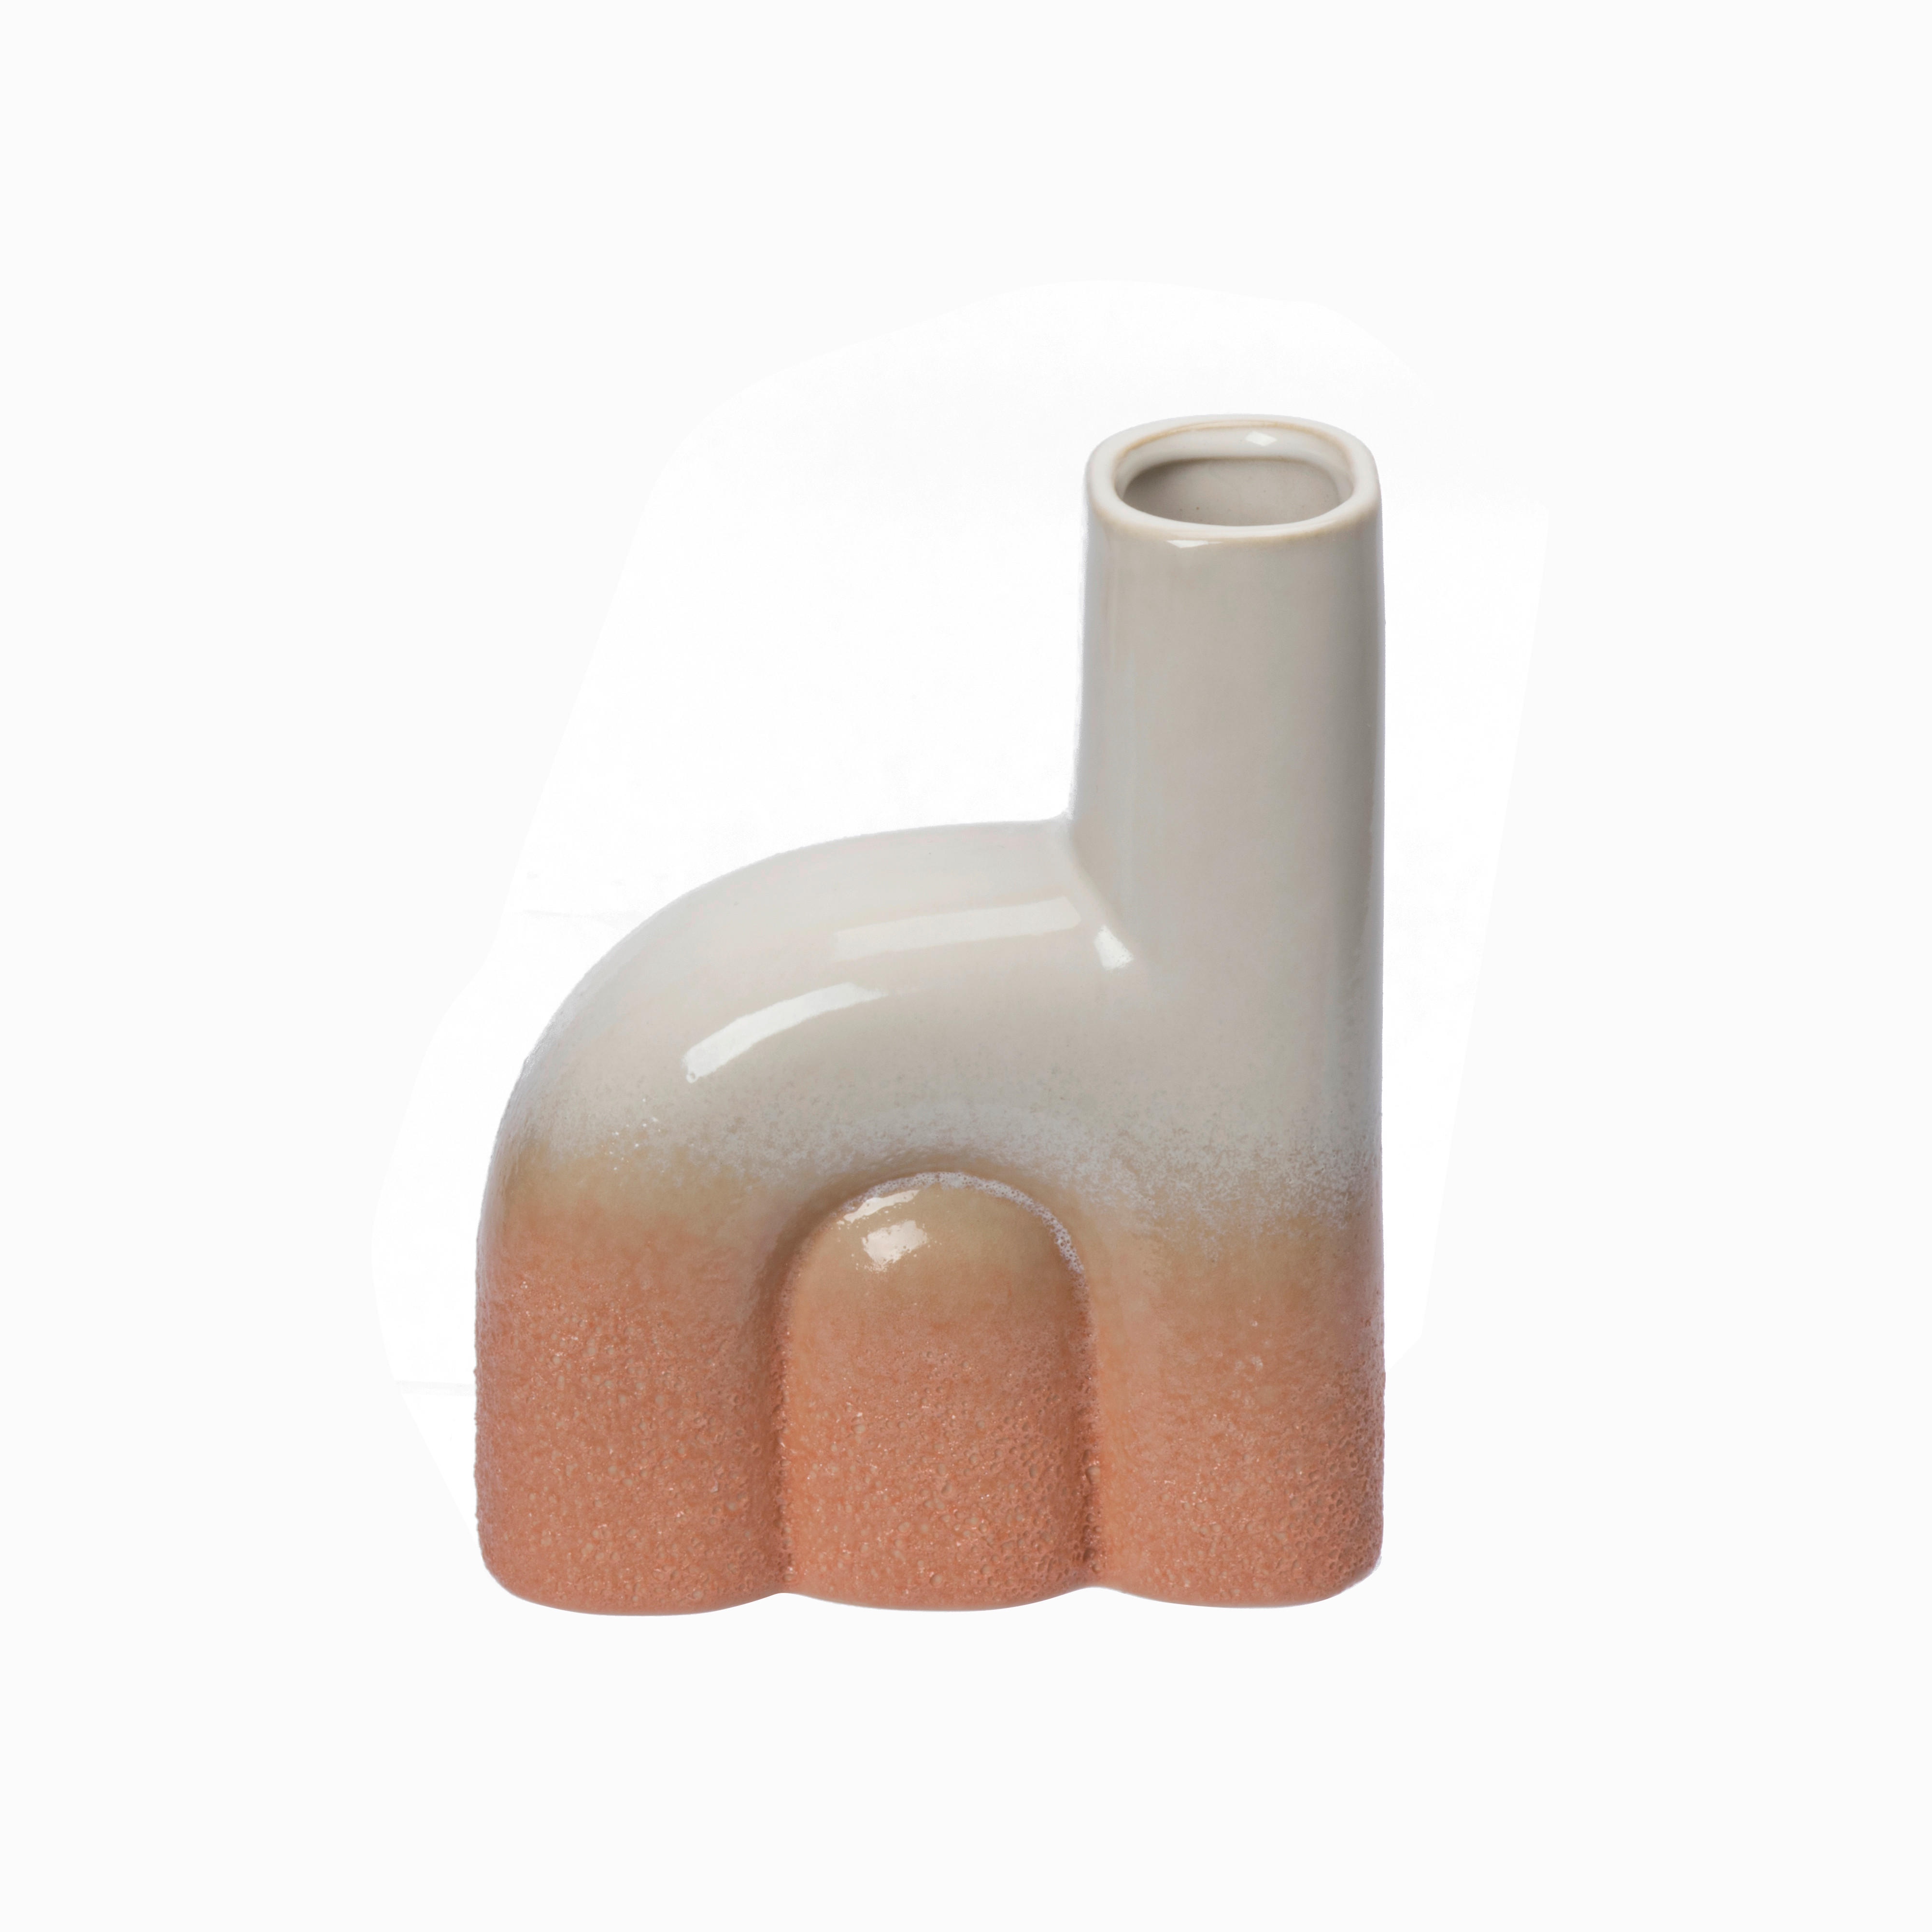 VASE 15.5 cm  - Weiss/Terracotta, Design, Keramik (12,4/15,5/5,2cm) - Ambia Home